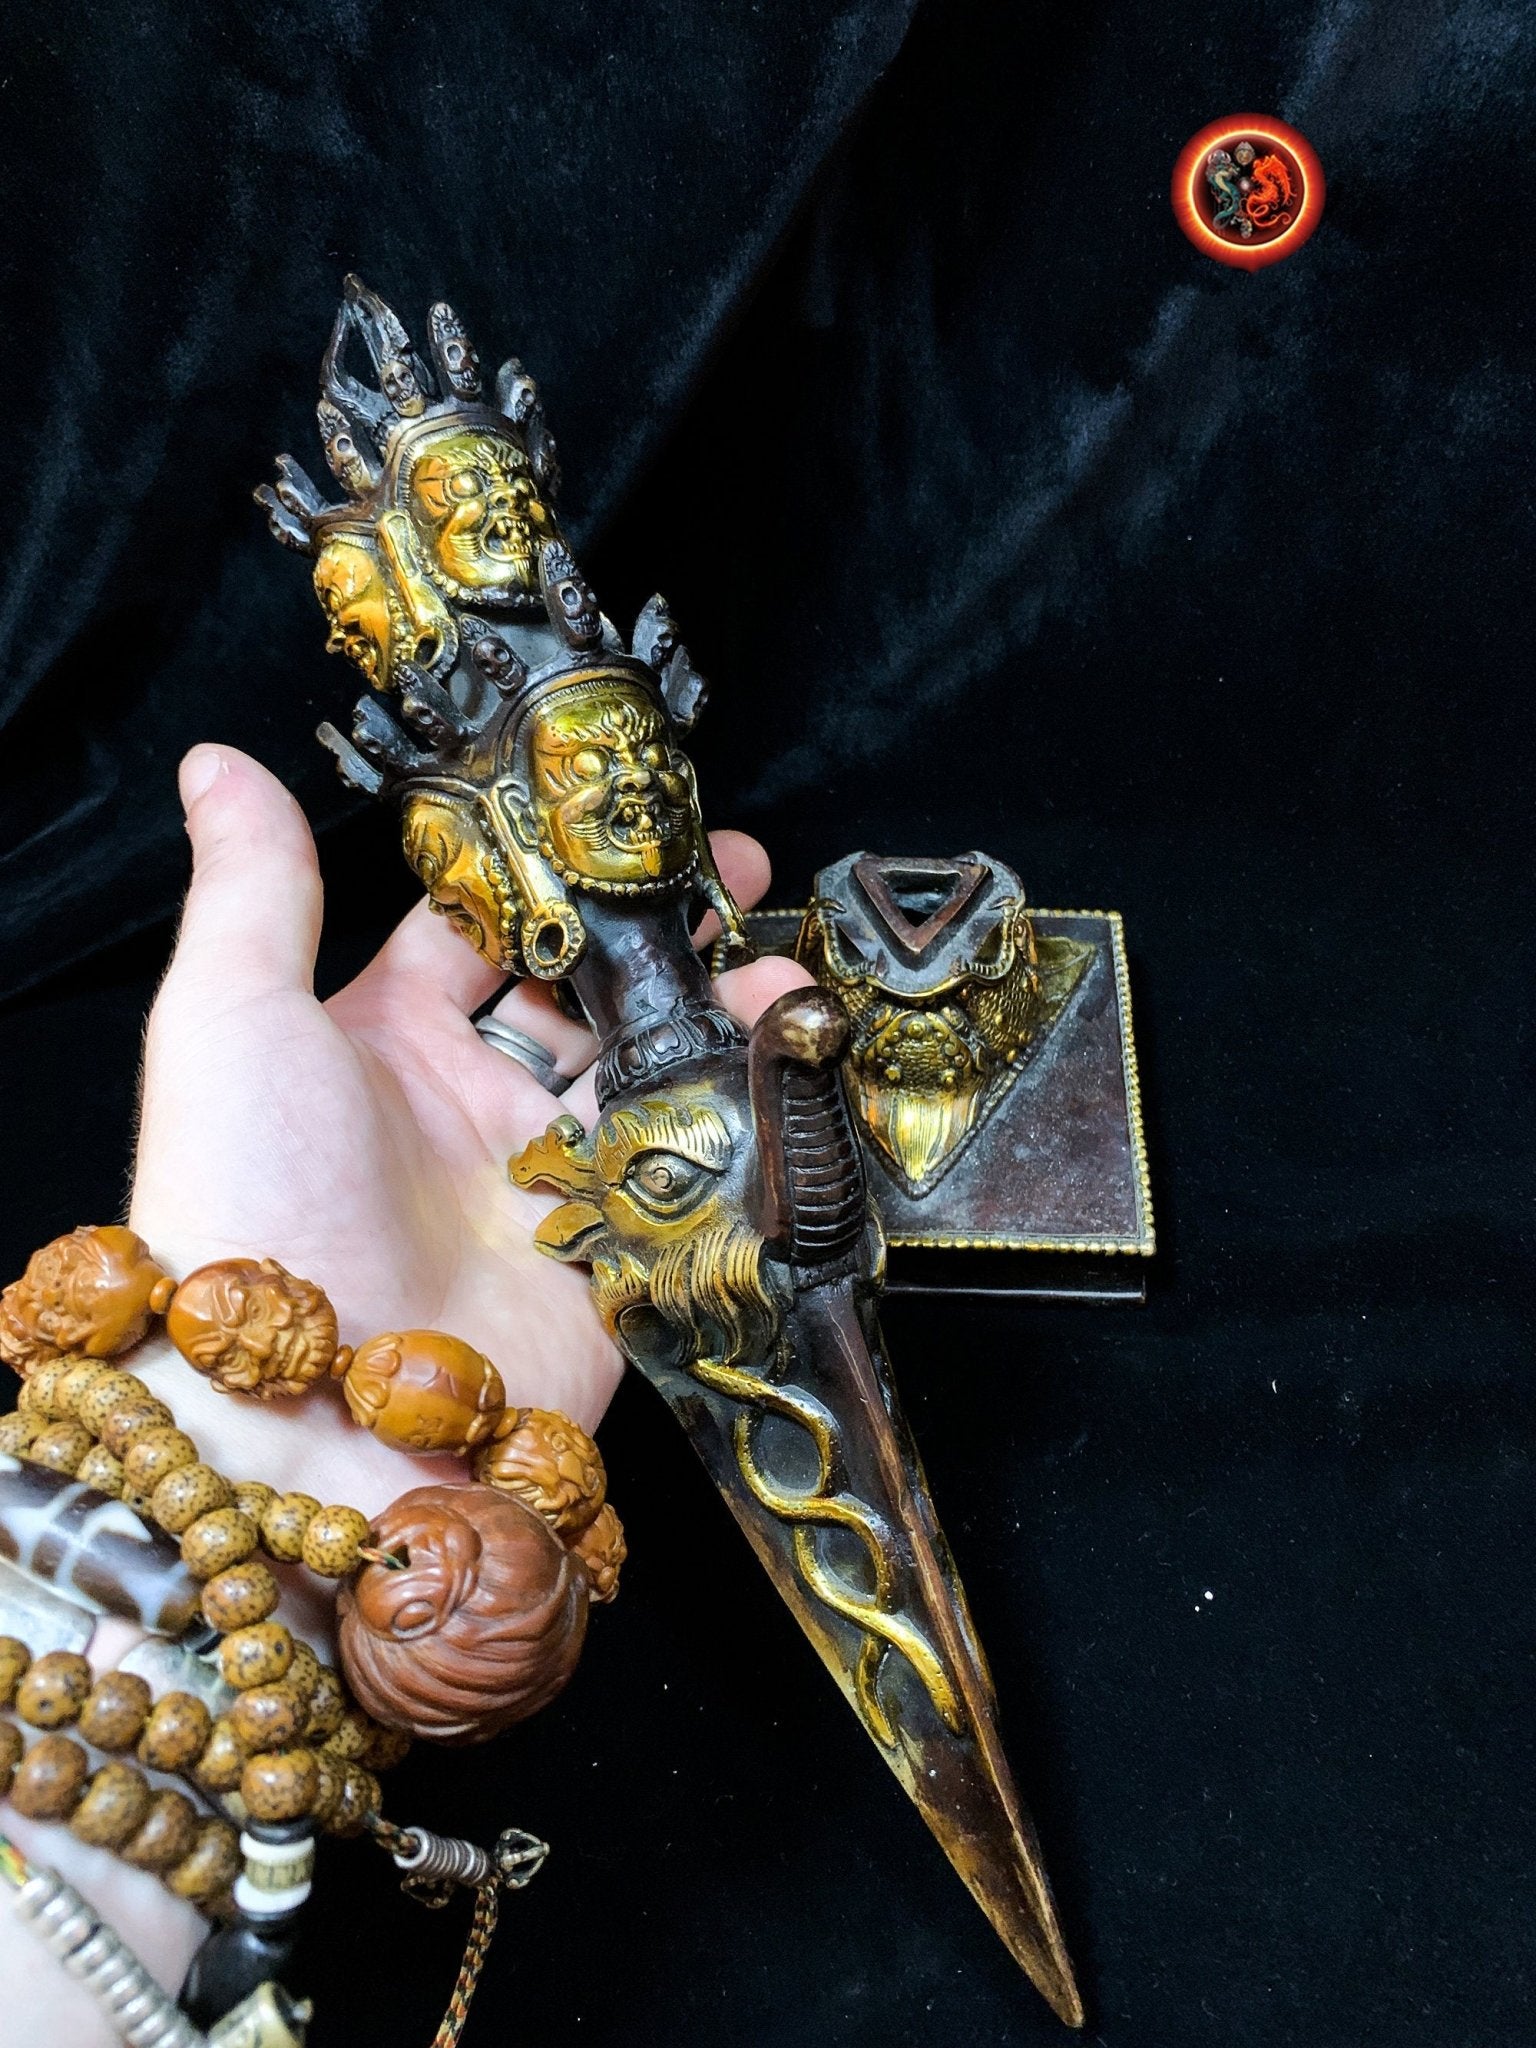 Grand Phurba bouddhiste vajrayana tibetain. Bronze. Dague rituelle - obsidian dragon